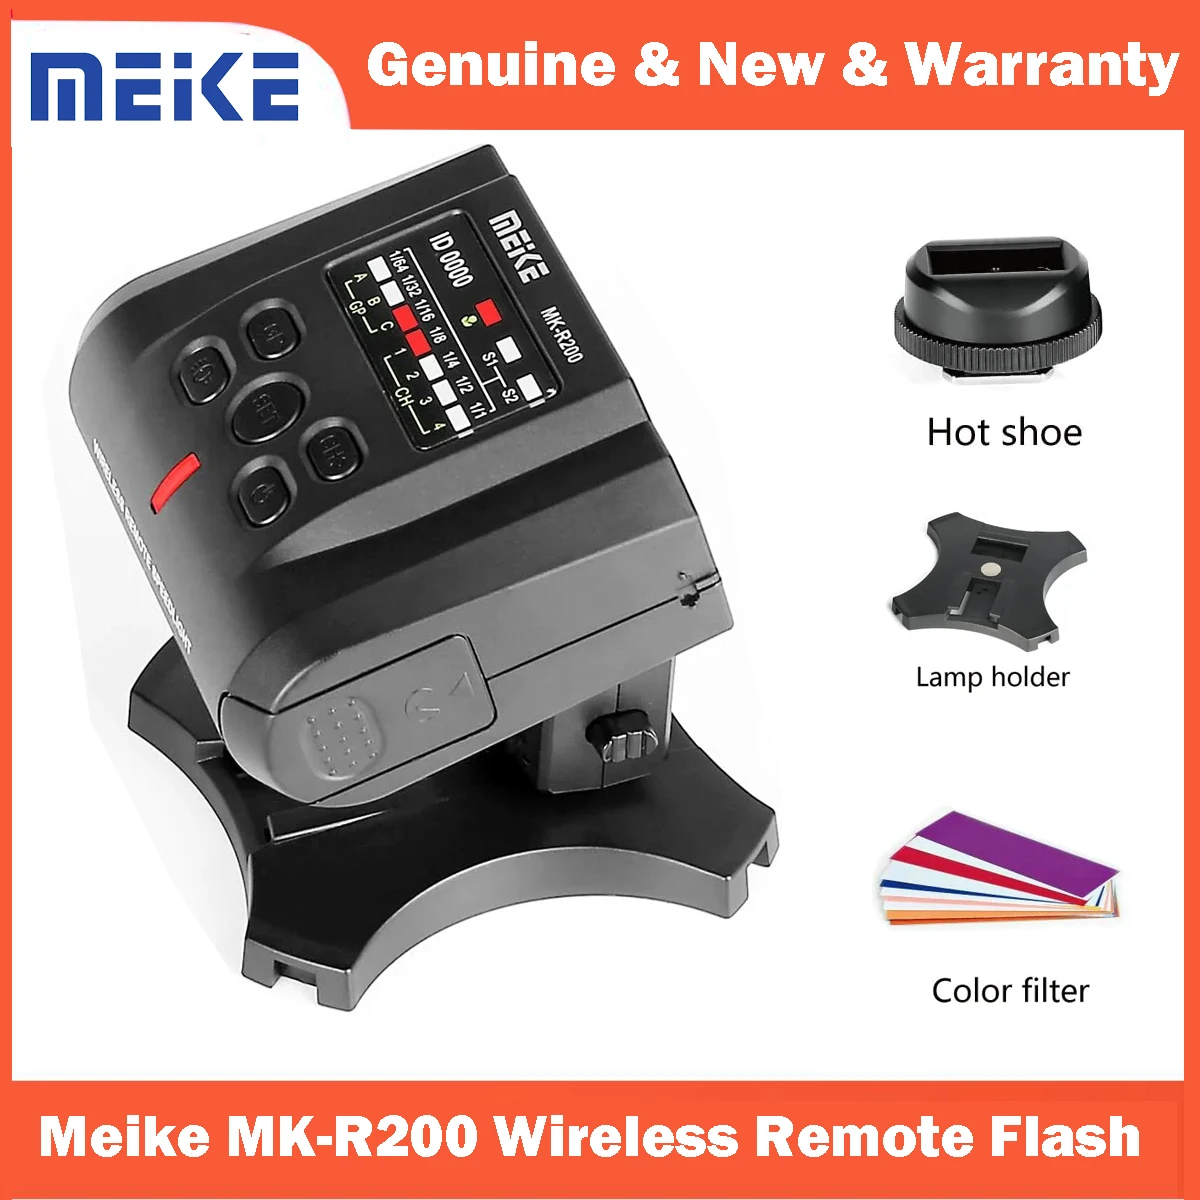 

Meike MK-R200 II 2.4GHz HSS Wireless Remote Flash for Nikon Sony Canon Cameras